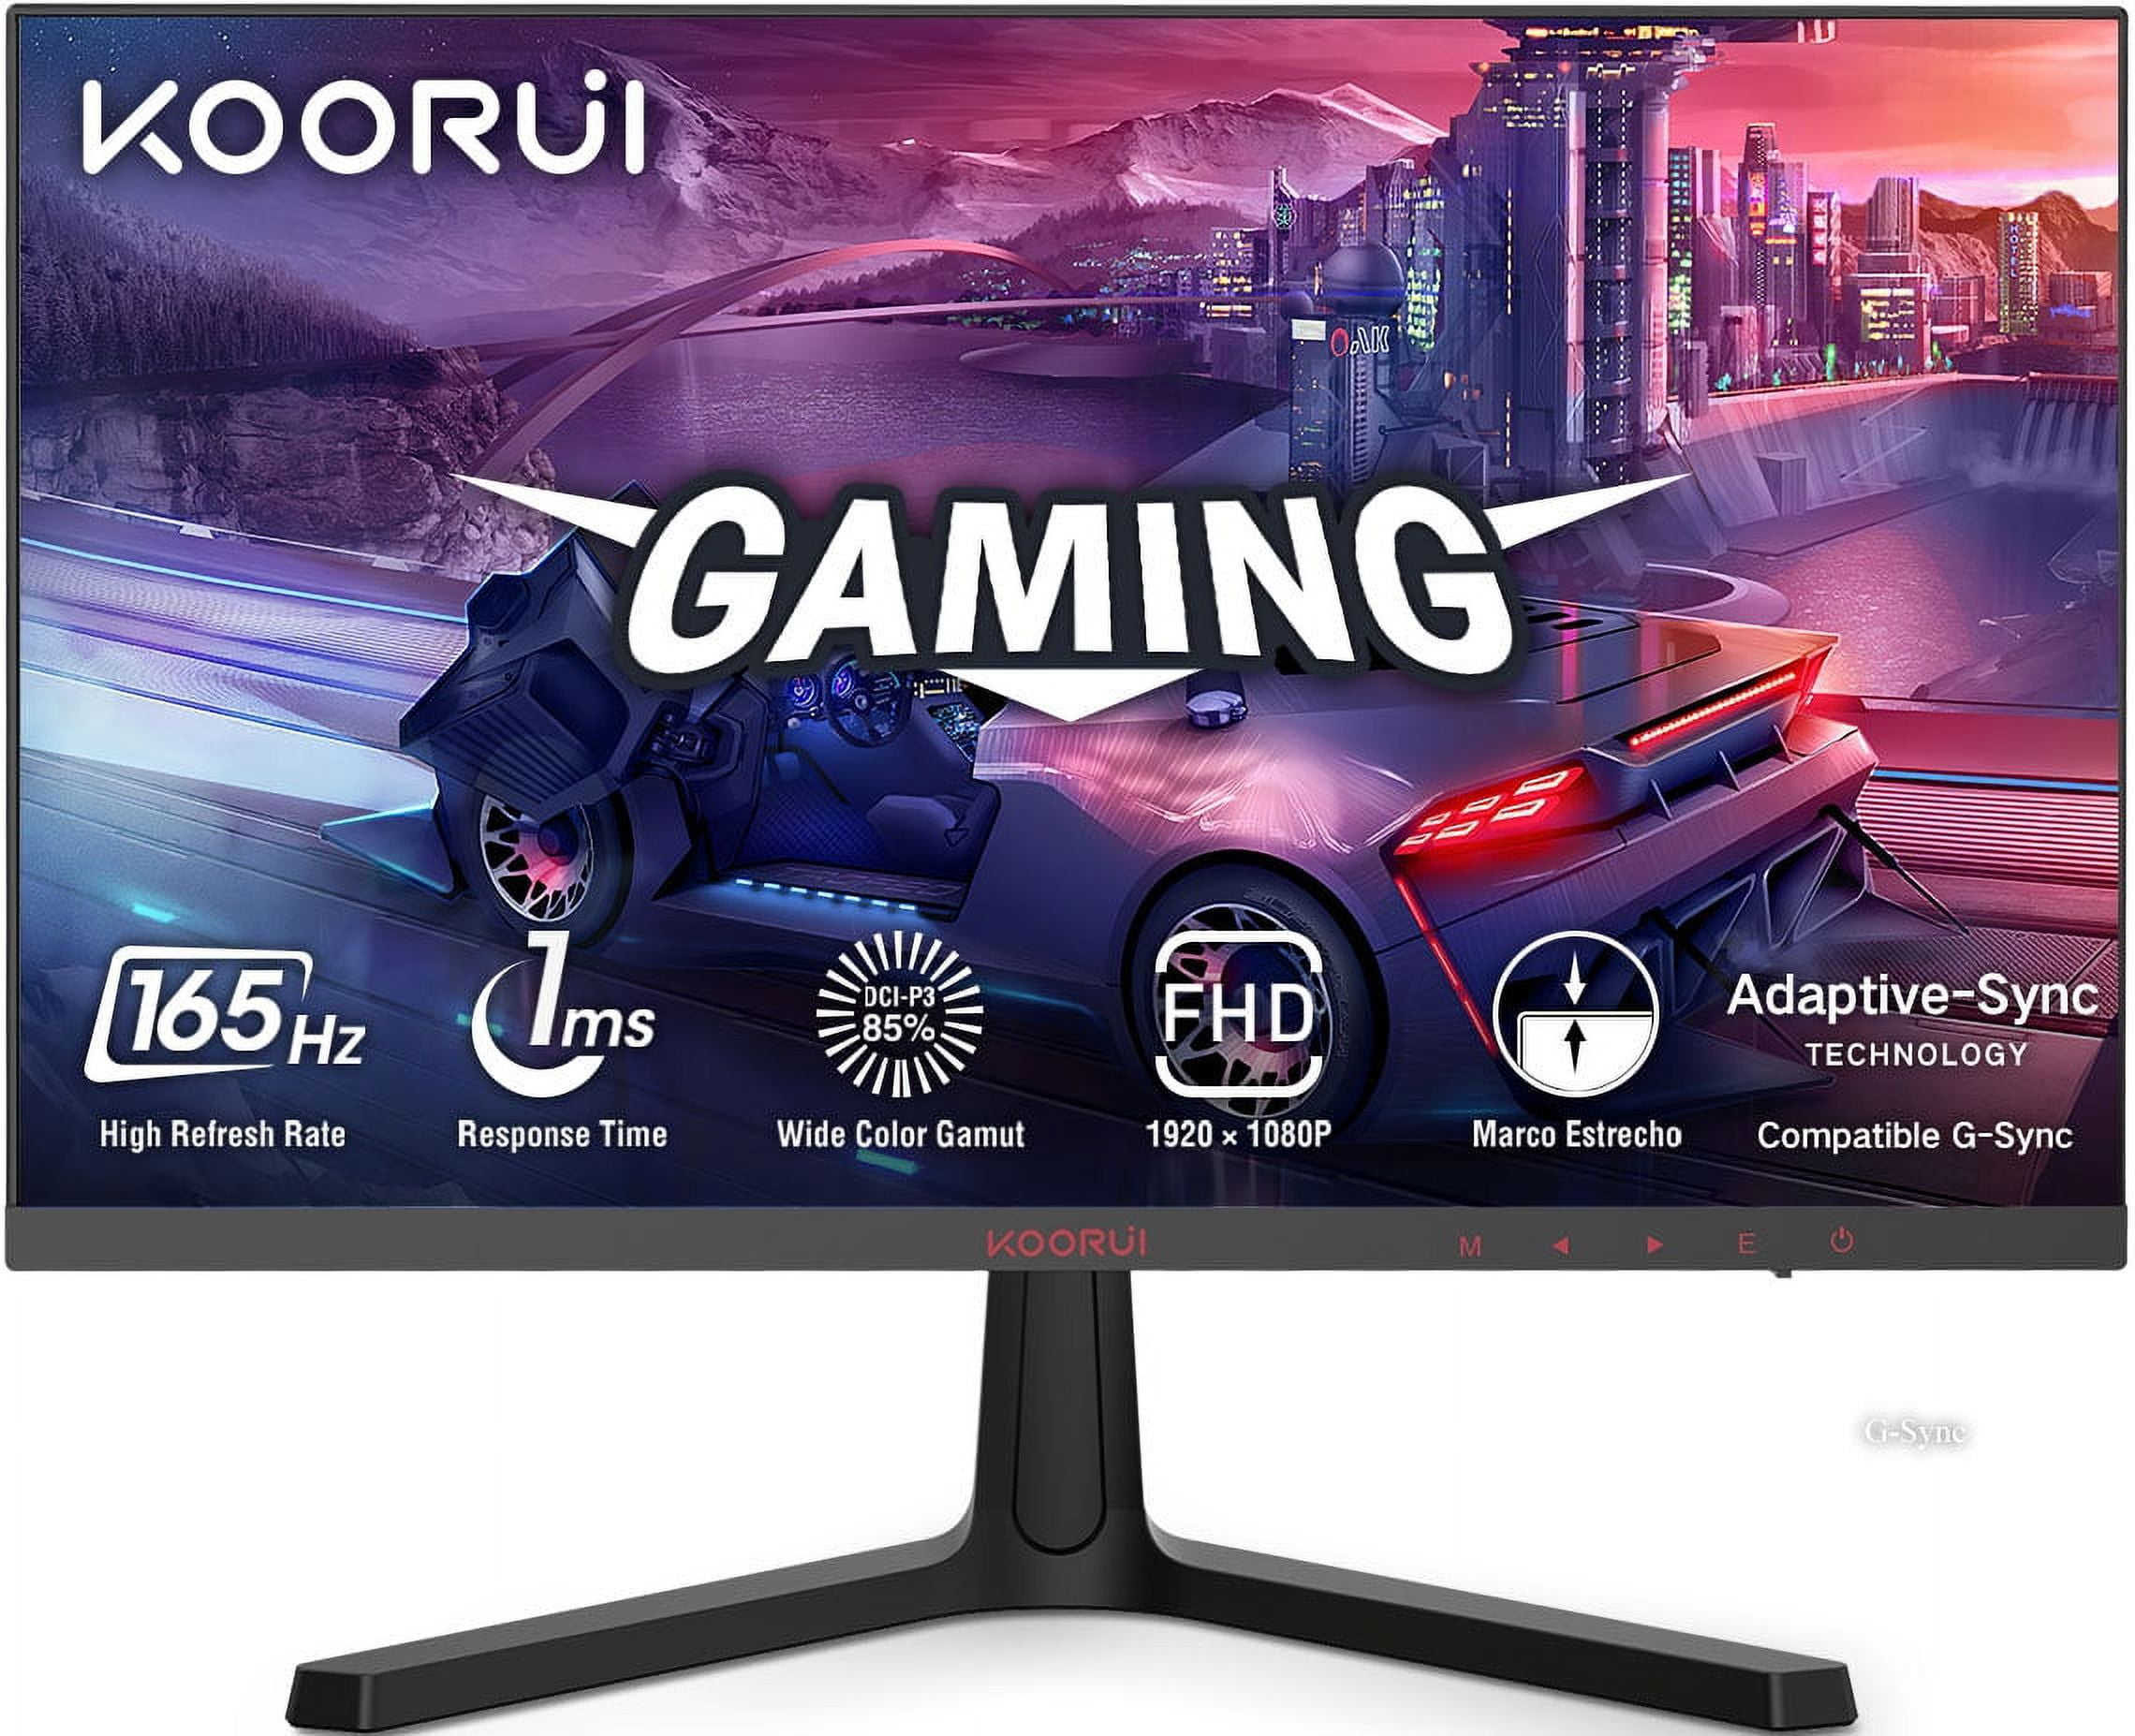 KOORUI's 1440p Gaming Monitor sees appealing price drop in post-Christmas  deal - PC Guide